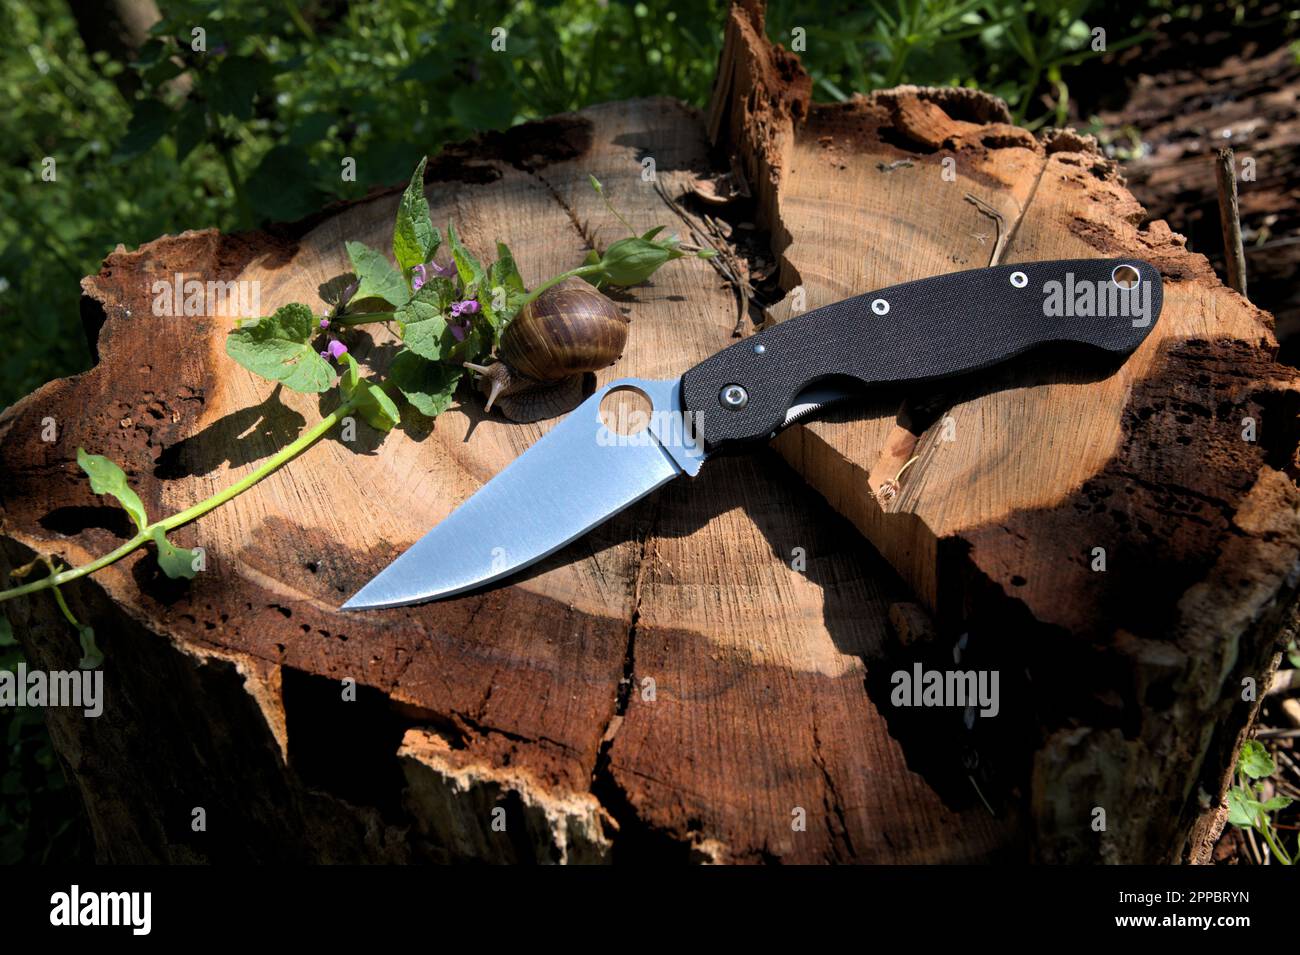 https://c8.alamy.com/comp/2PPBRYN/folding-knife-beautiful-design-cutting-silver-edge-black-carbone-fiber-handle-dry-tree-stump-green-grass-flowers-snail-2PPBRYN.jpg